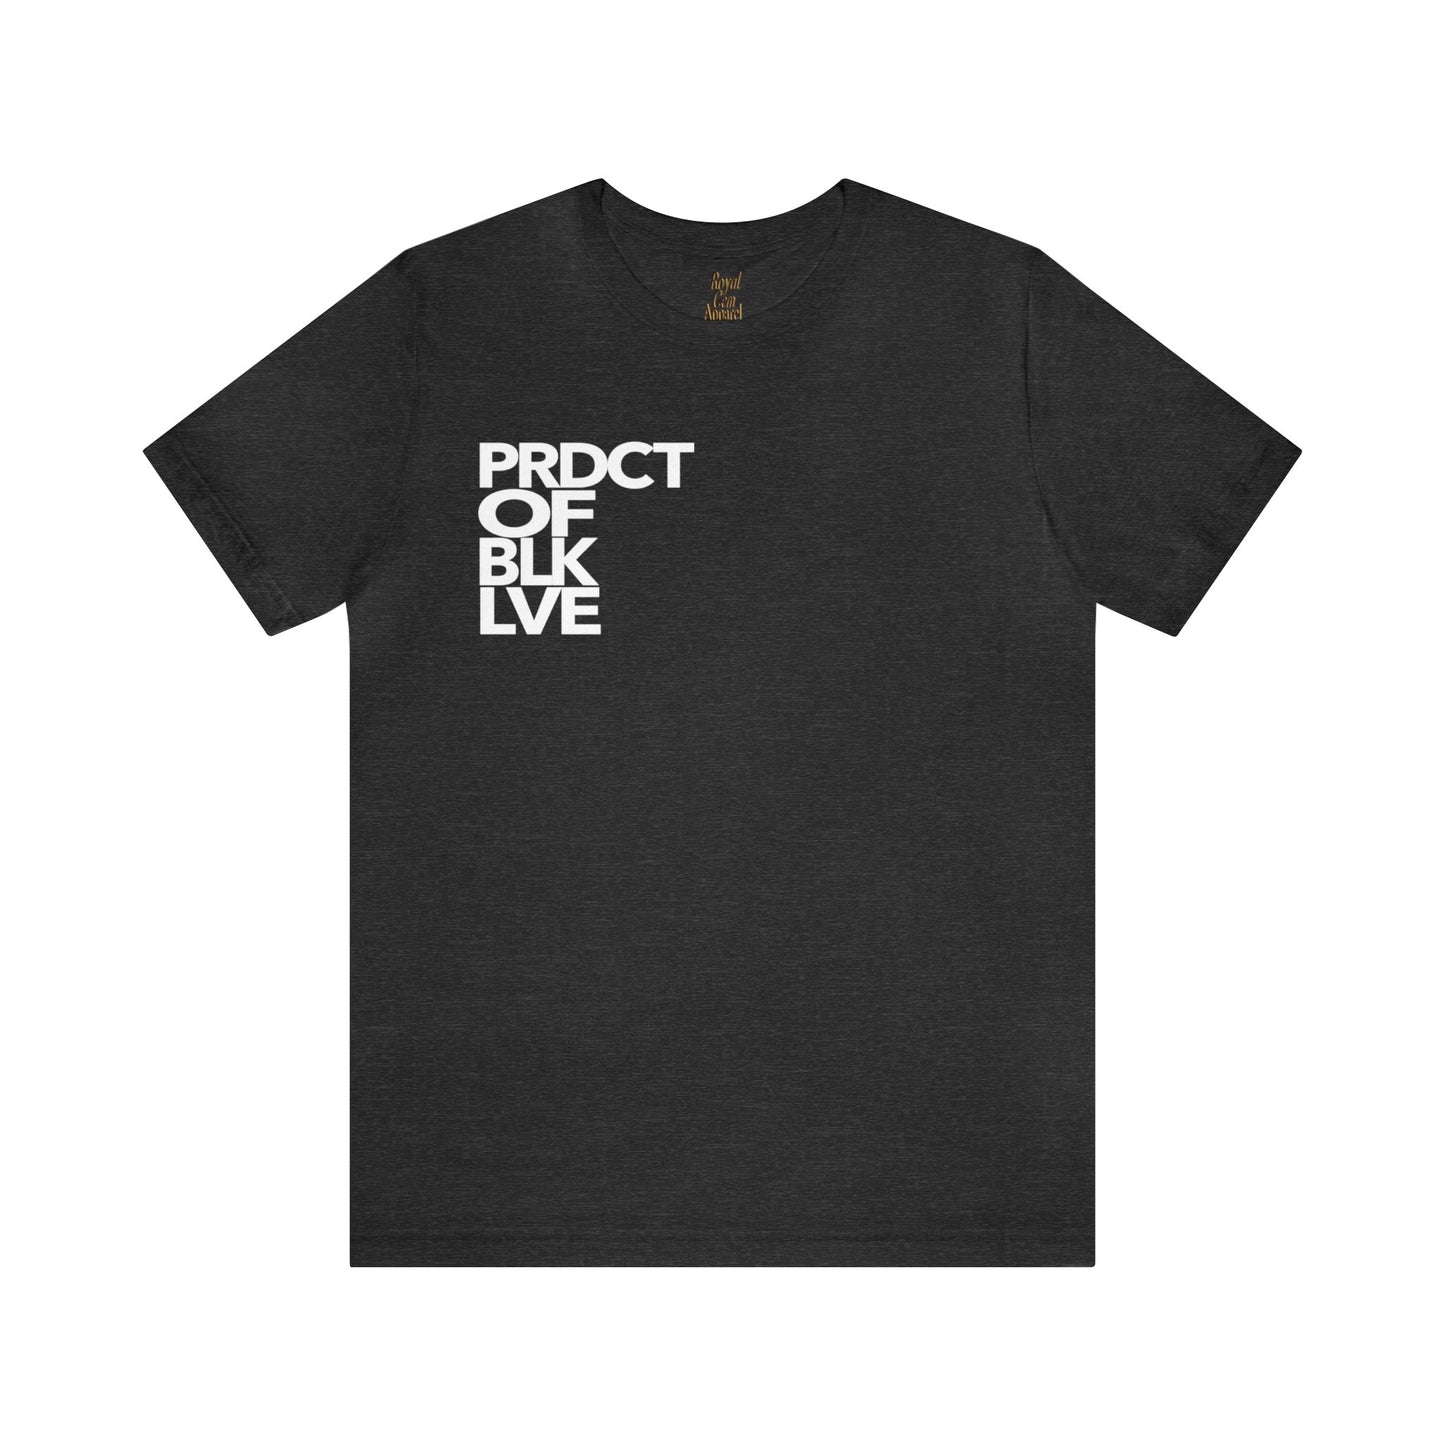 "Product of Black Love" Tee